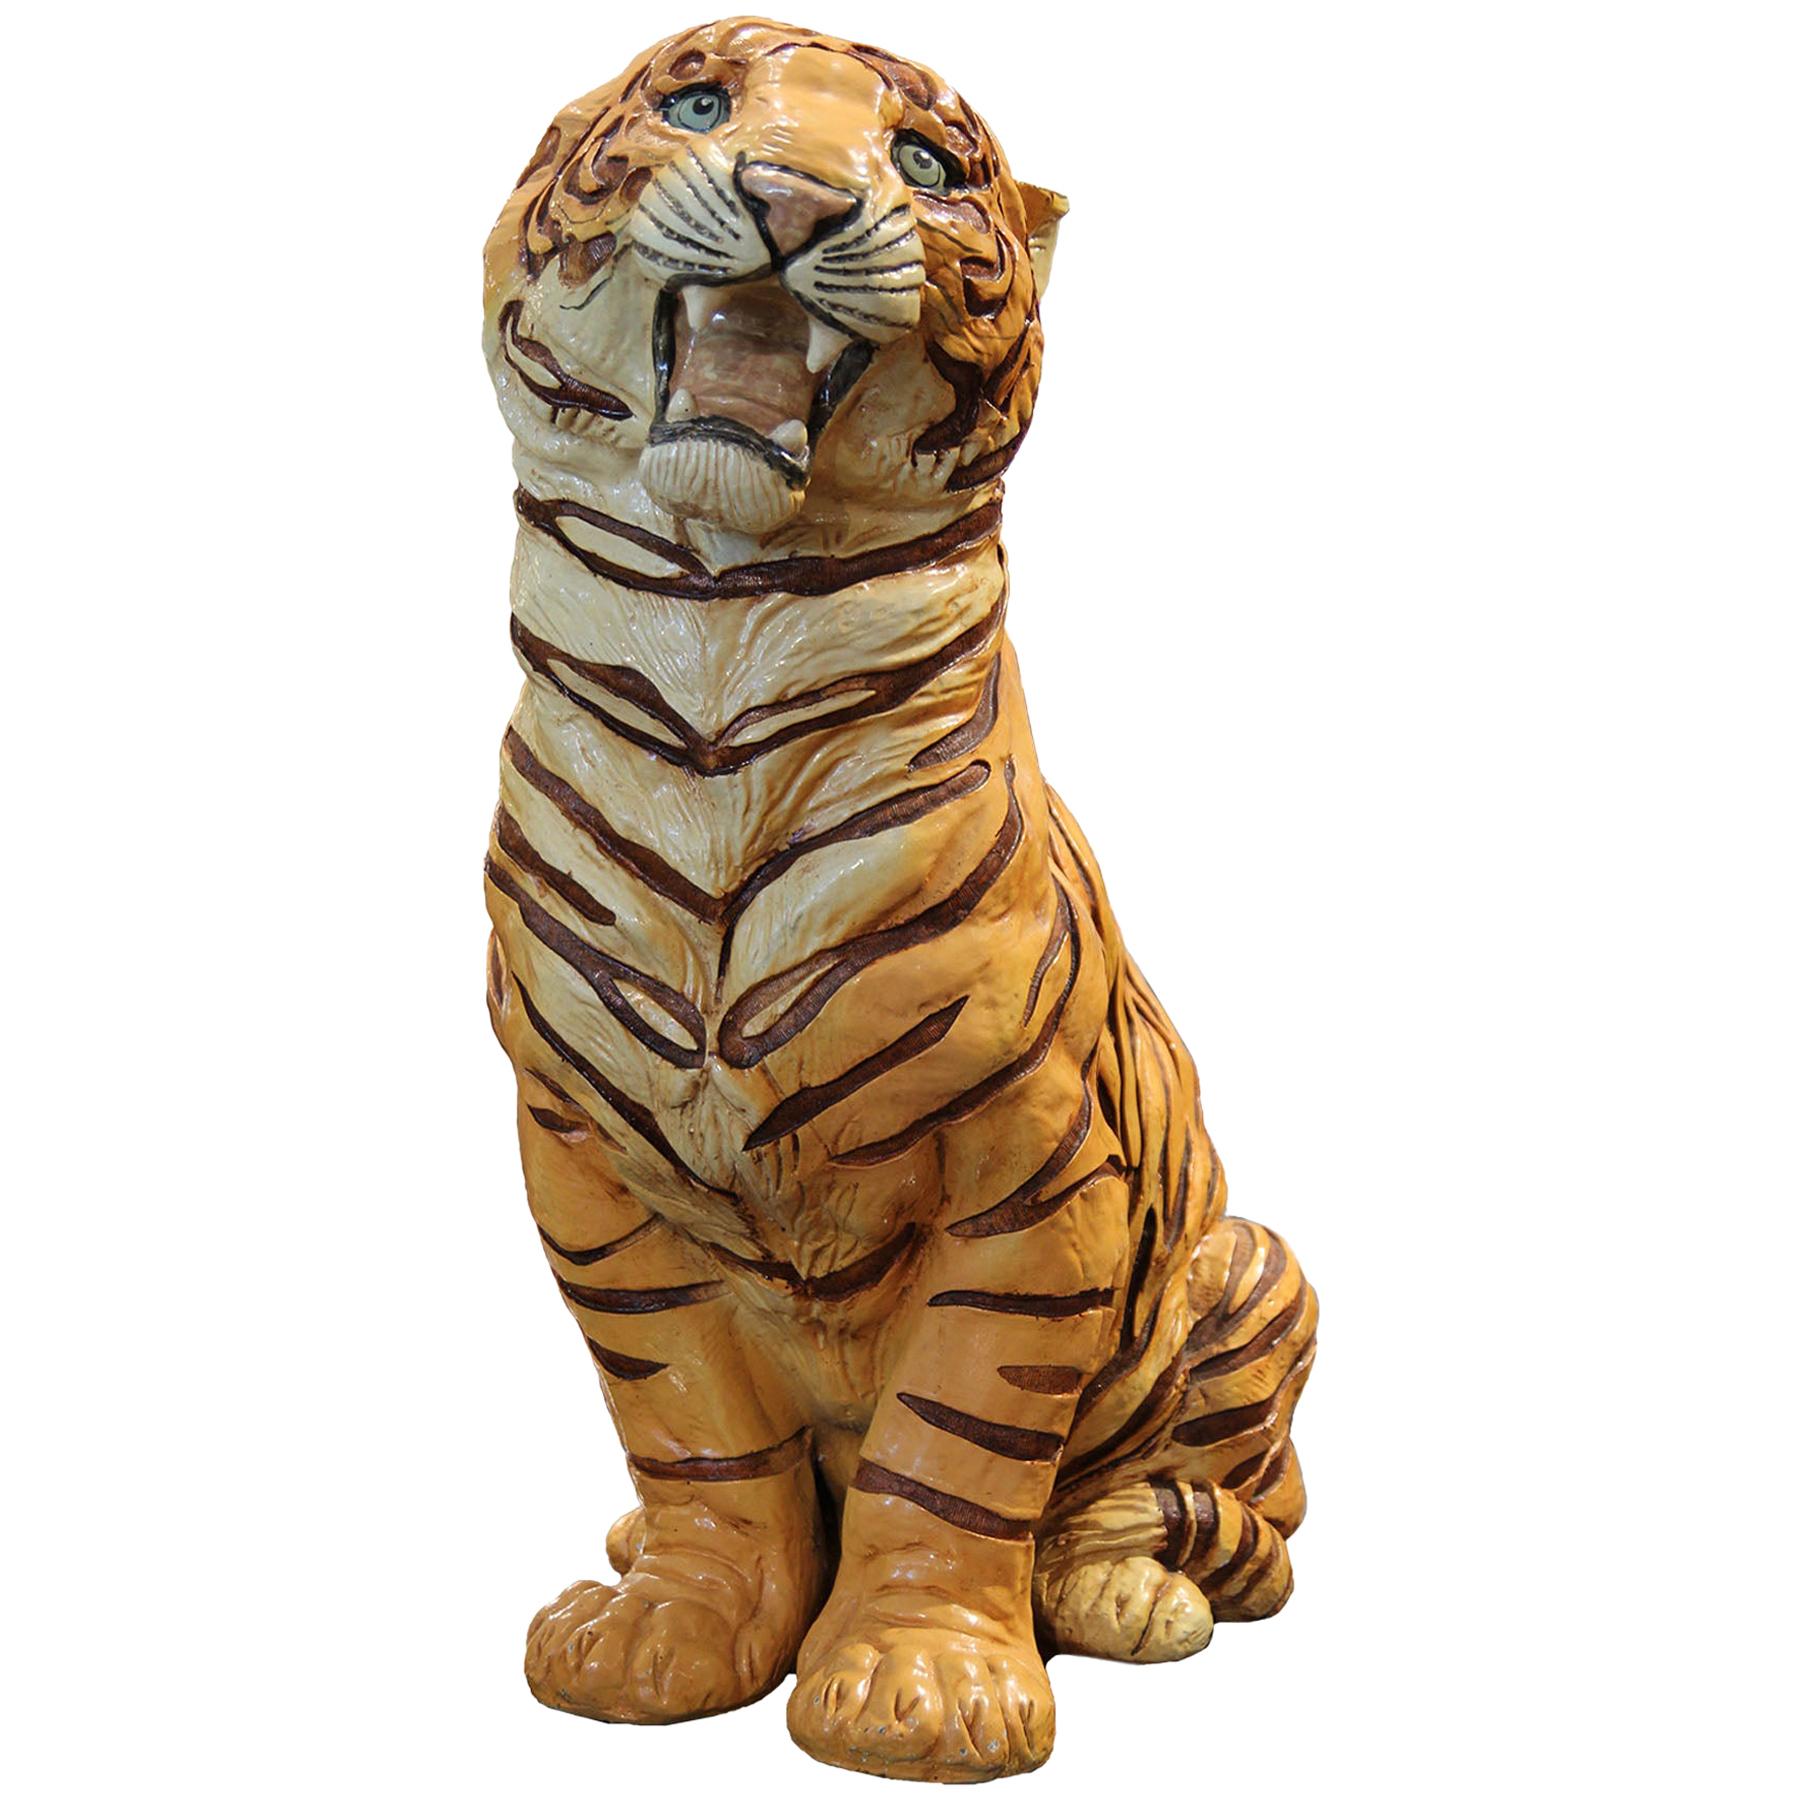 Naturalistic Porcelain Tiger Sculpture or Statue